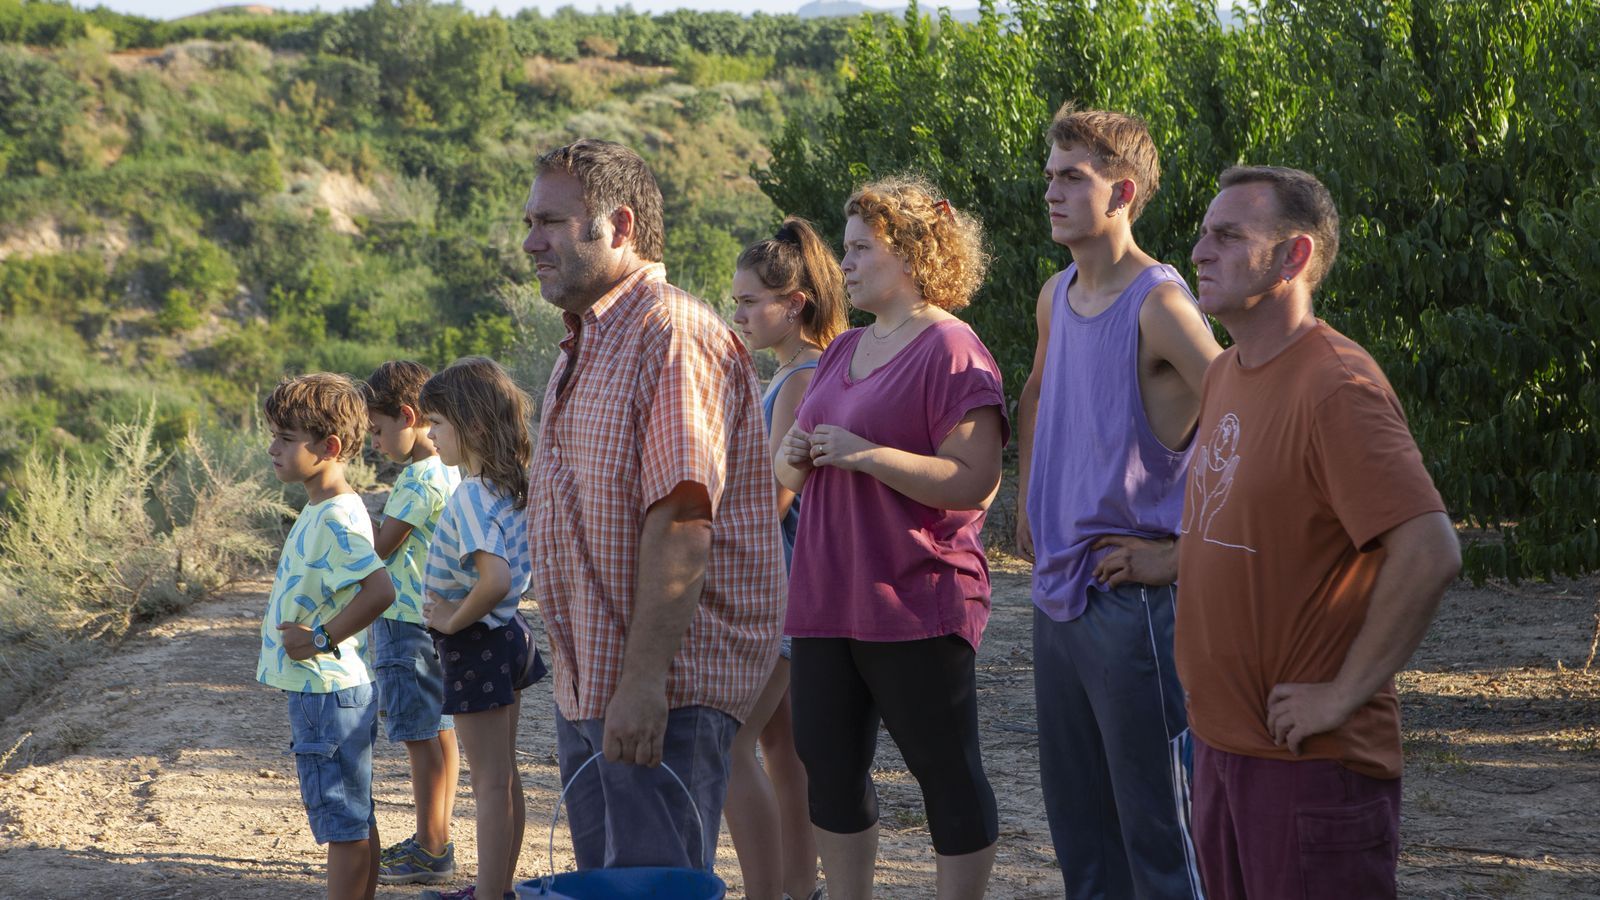 Trailer Watch: A Family Fights for Their Peach Farm in Carla Simón’s Oscar Contender “Alcarrás”